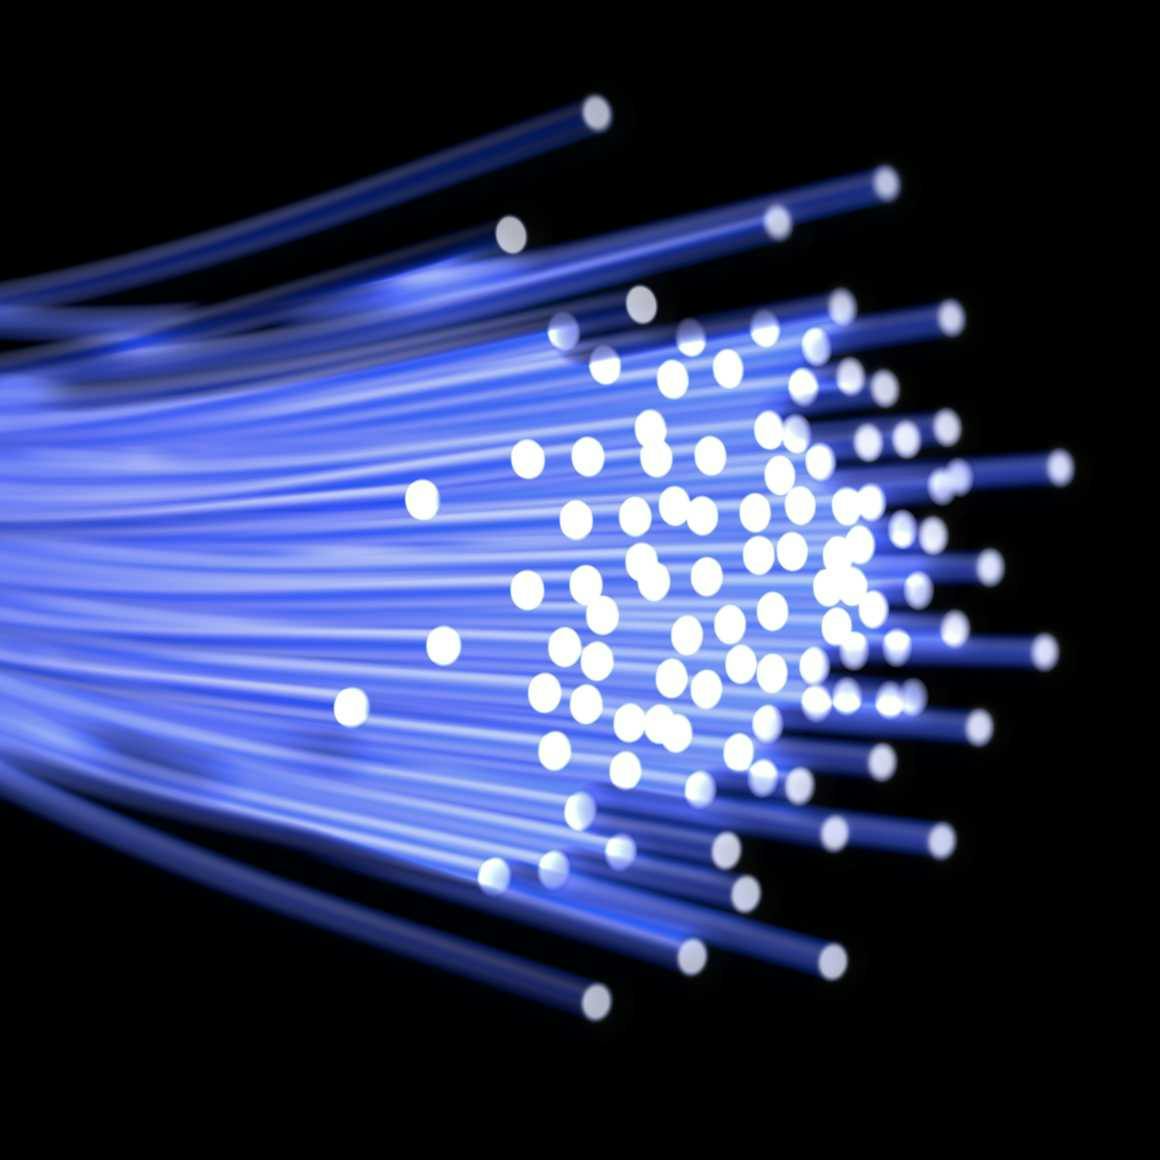 North Carolina Department of Transportation Broadband Infrastructure image